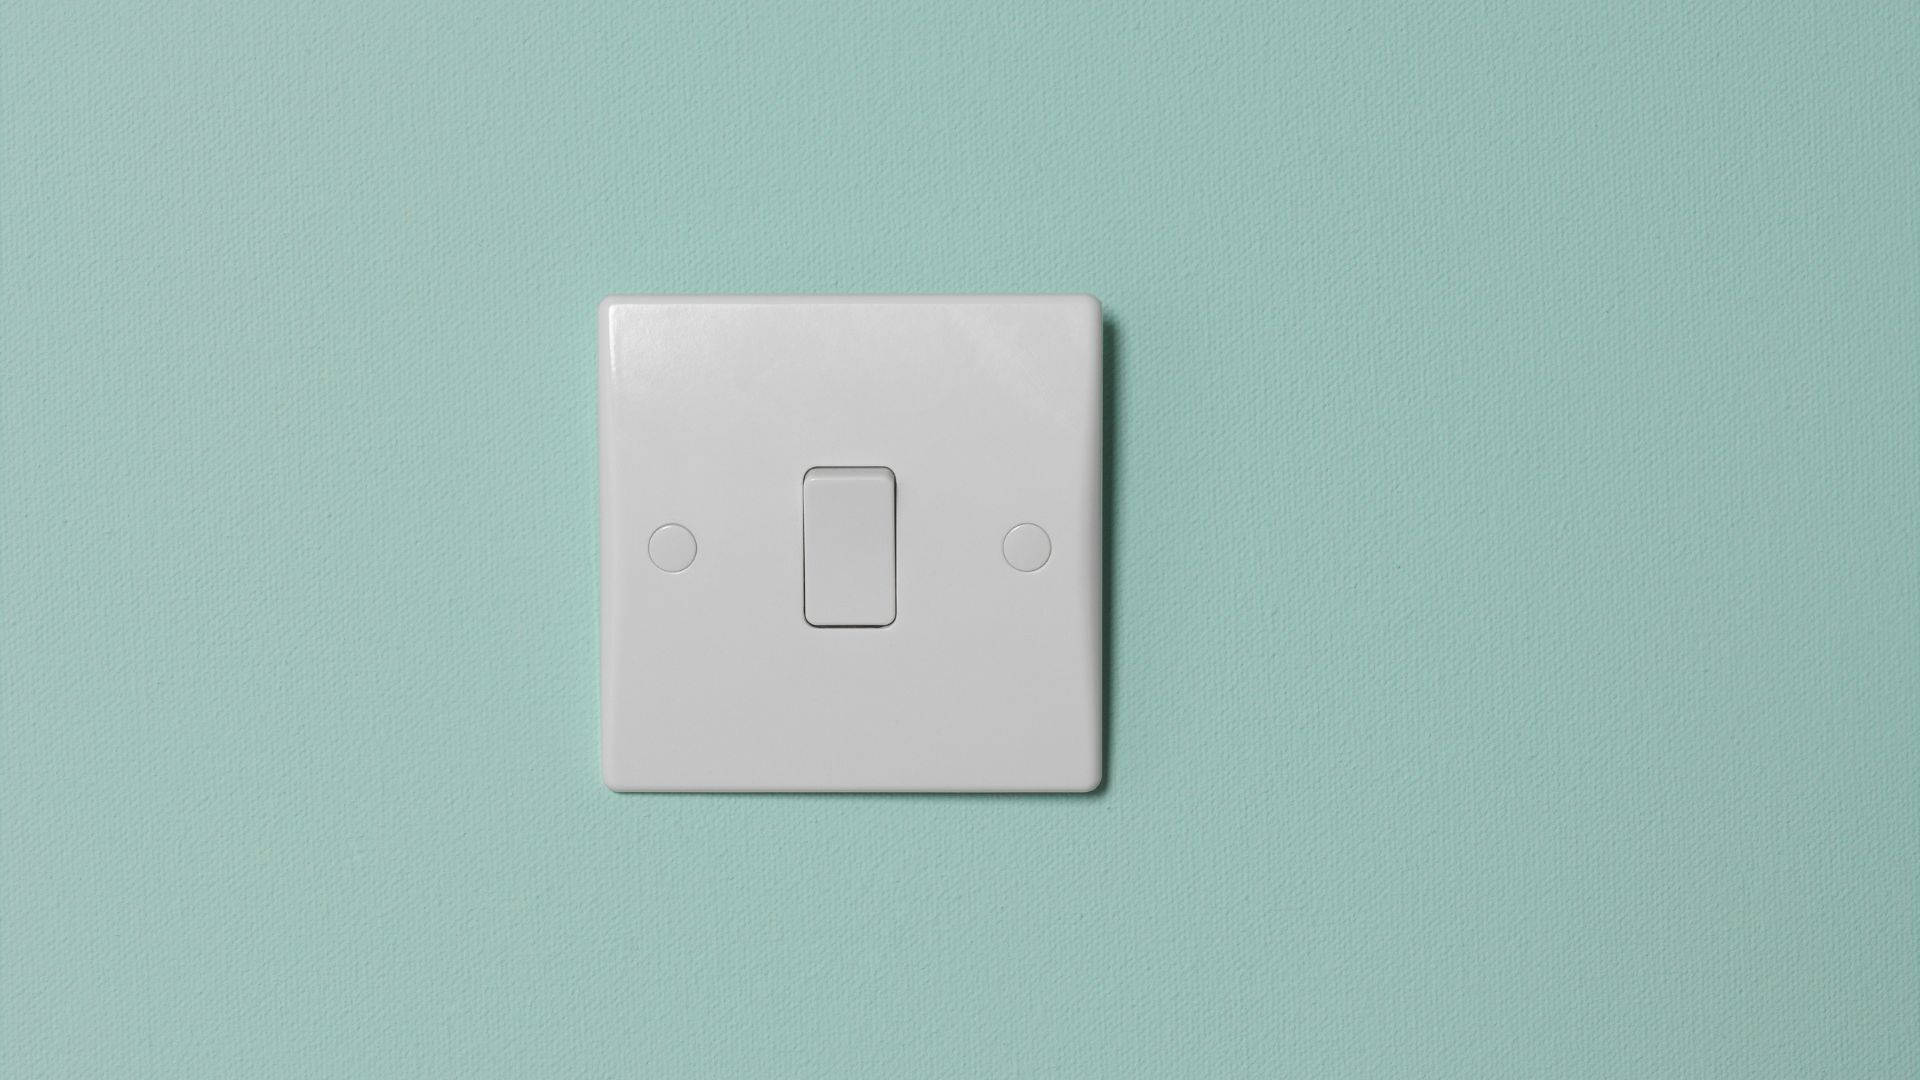 White Plug Socket Slimline Switch Wallpaper